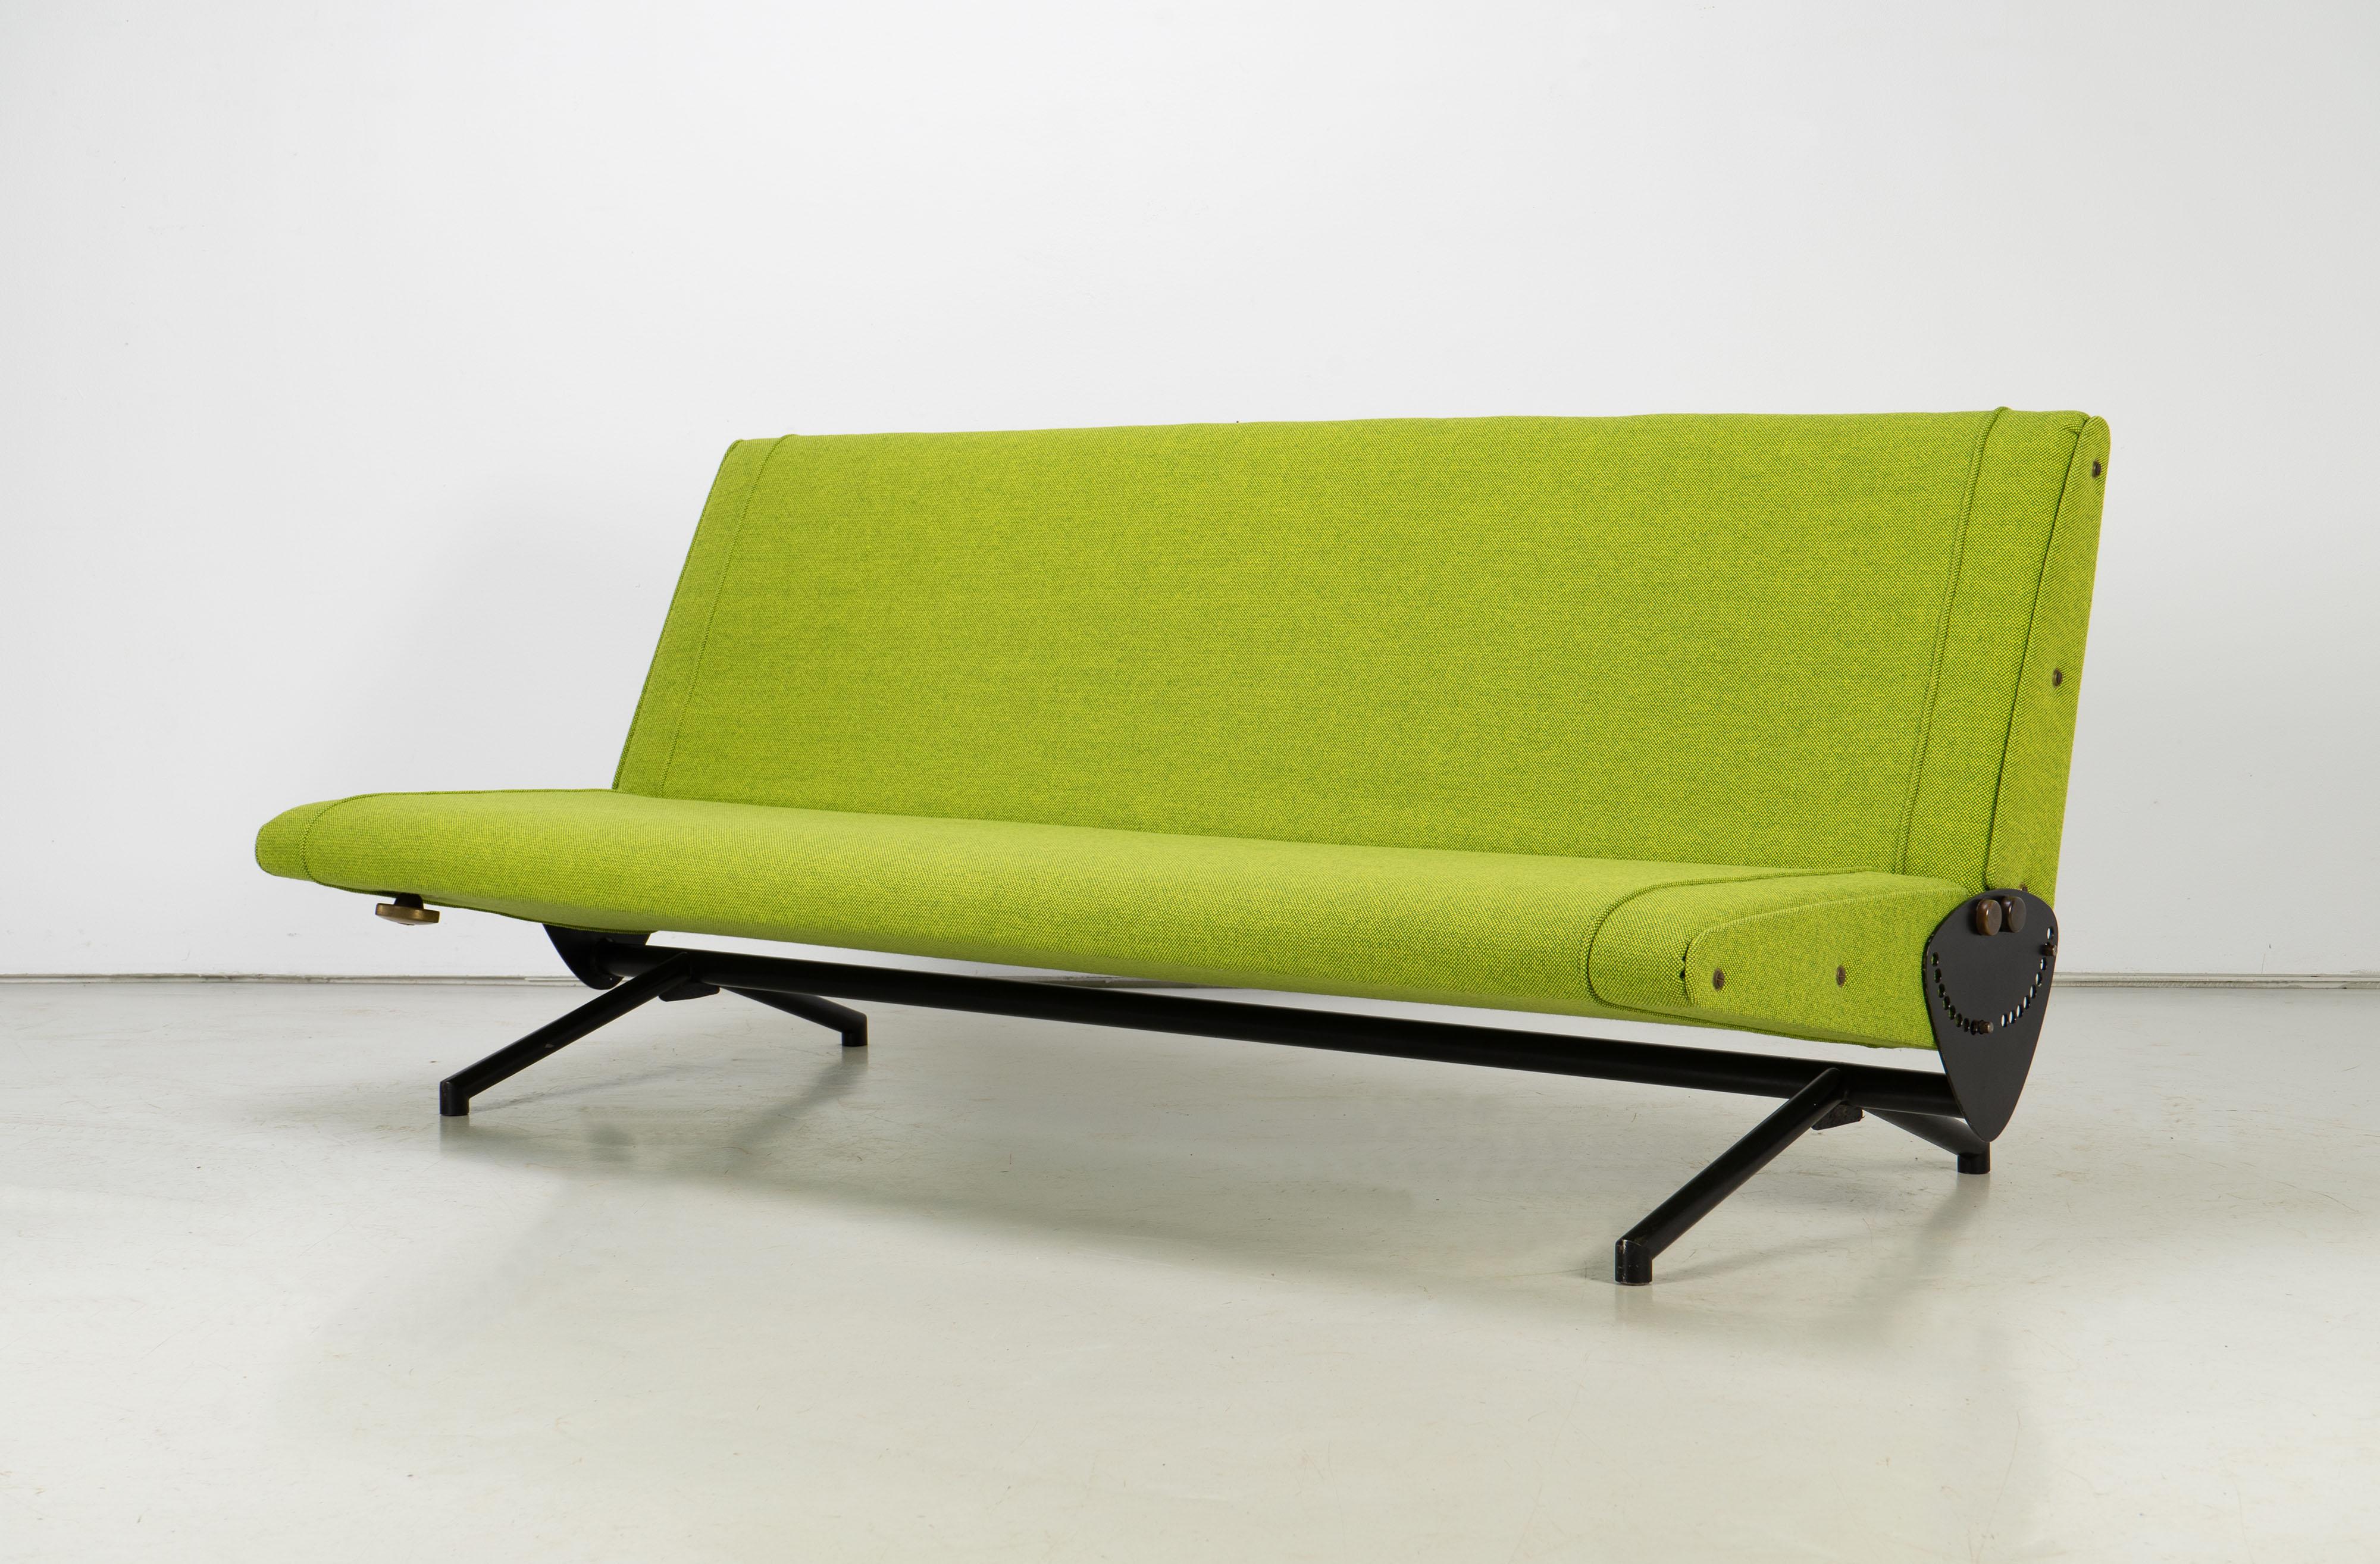 20th Century Italian Modern Sofa D70 by Osvaldo Borsani by Tecno, yellow-green Fabric, 1950s